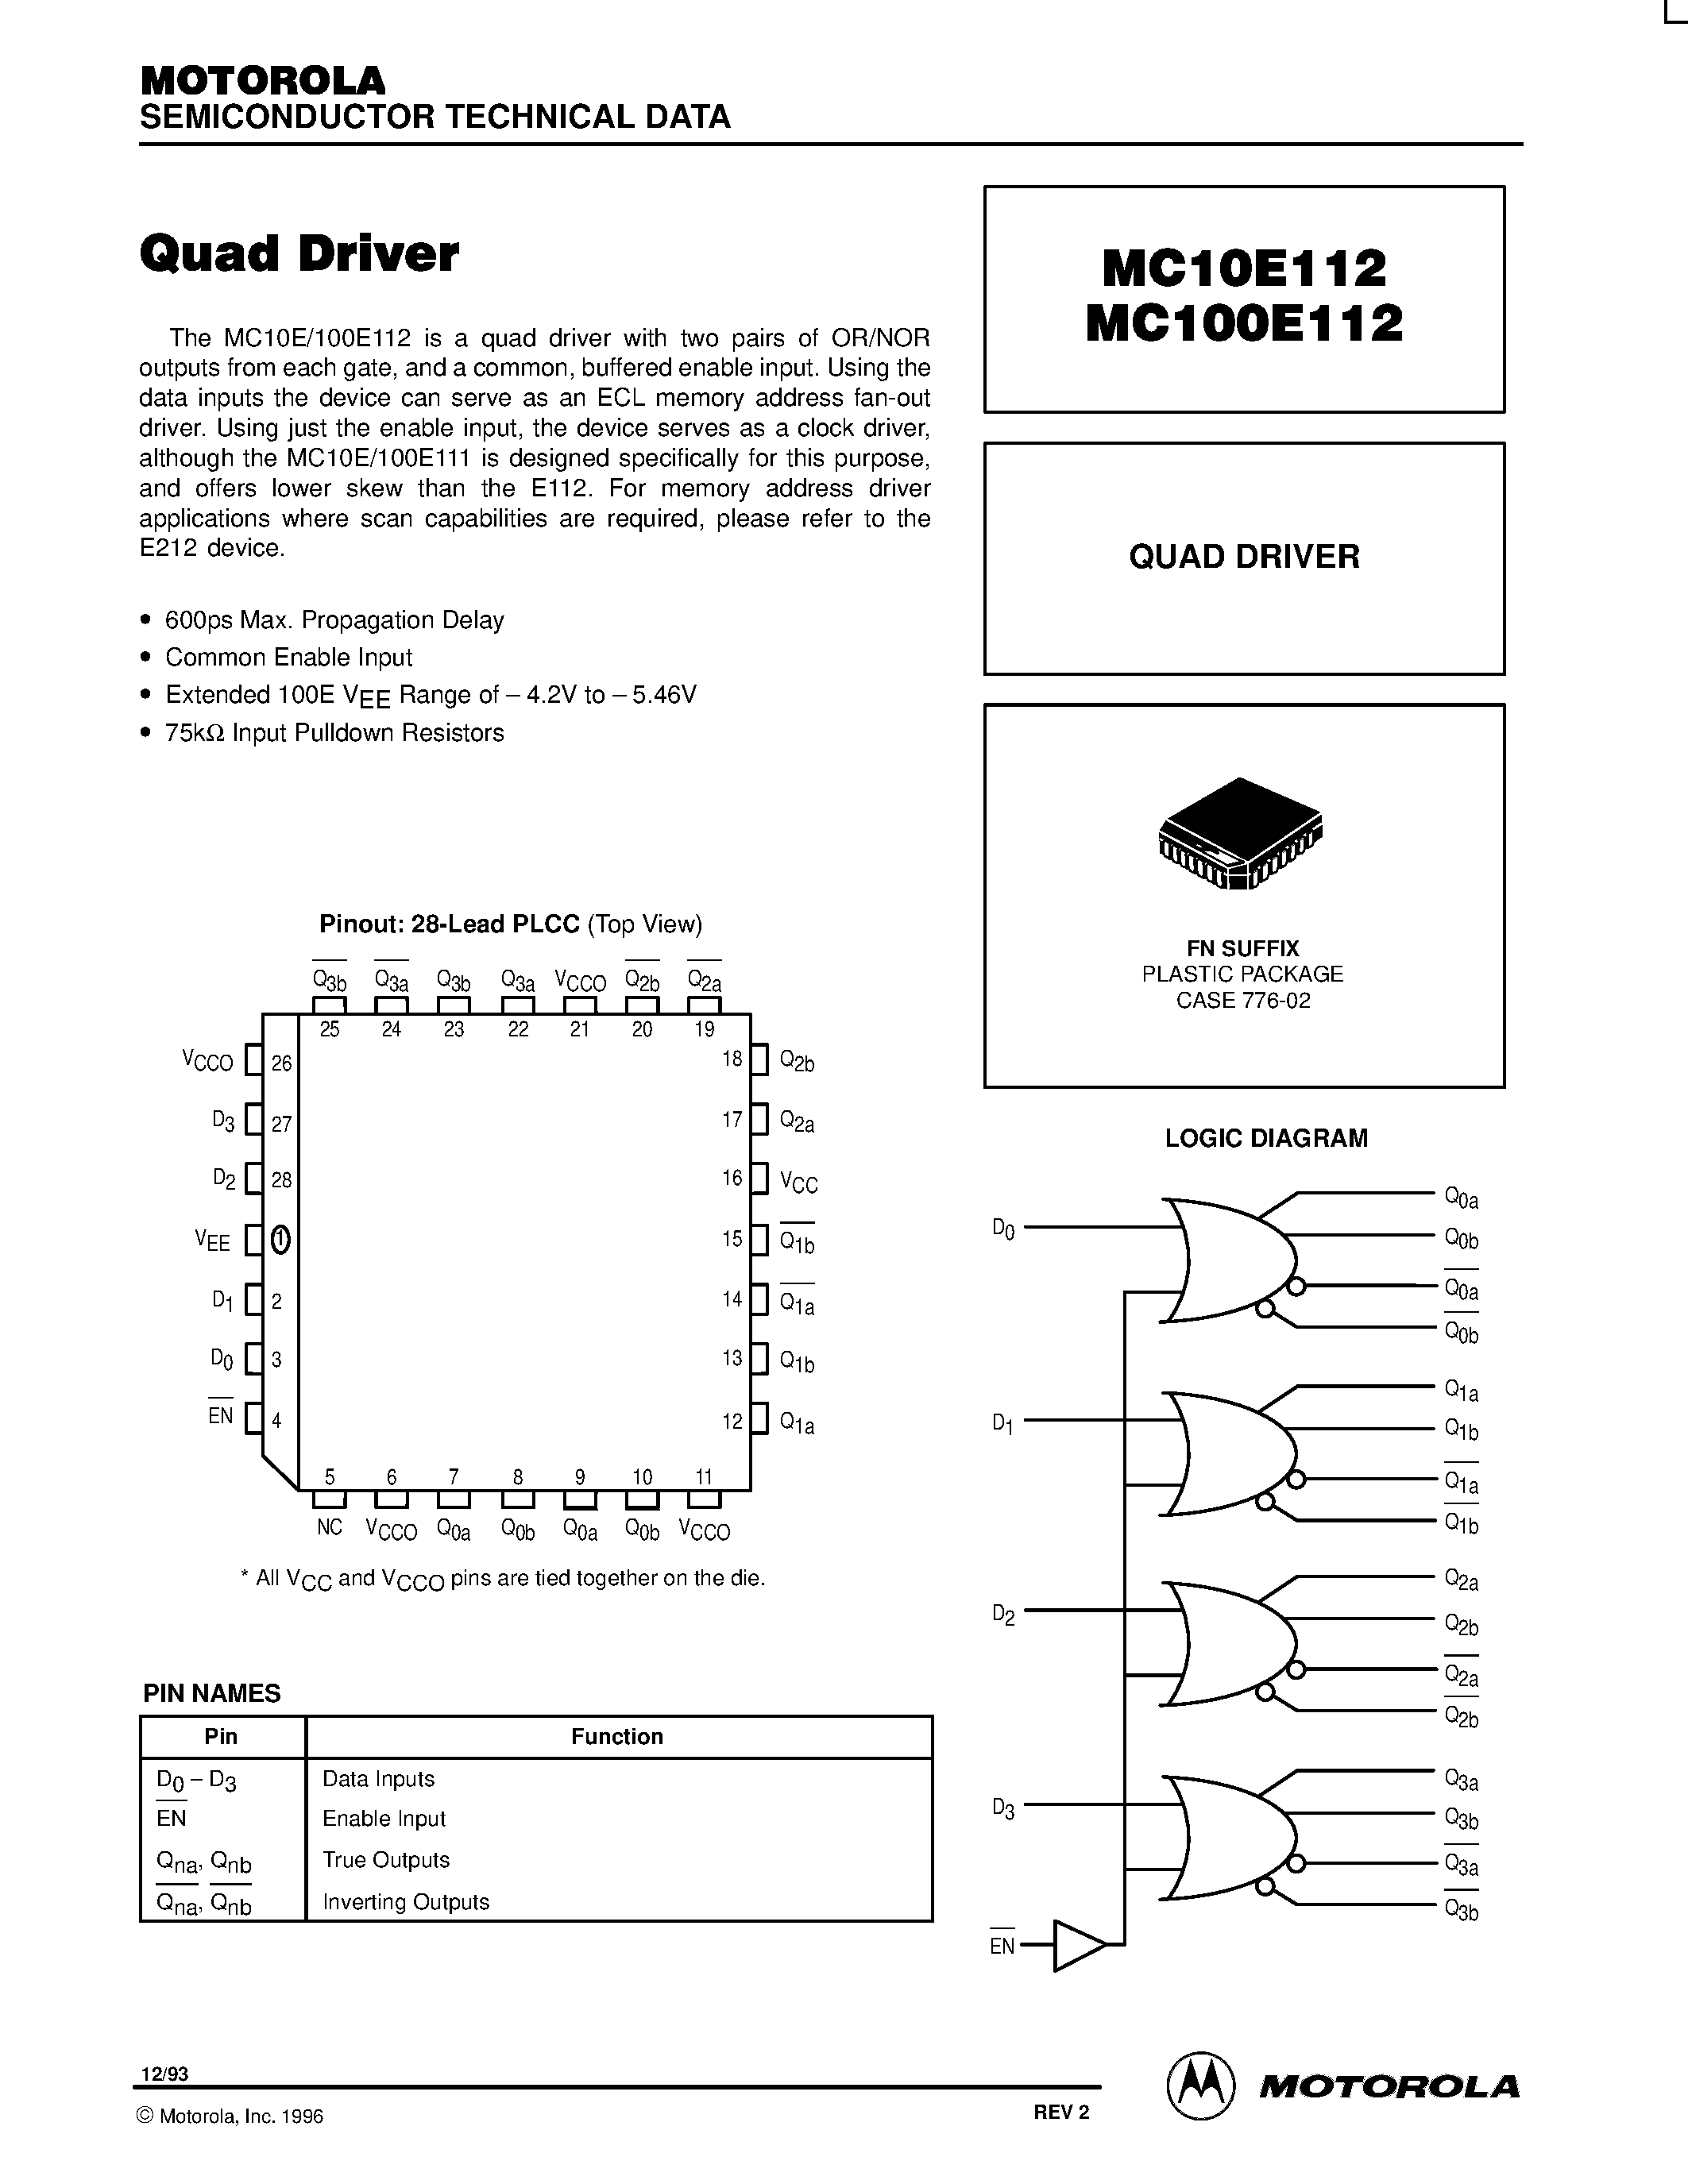 Datasheet MC100E112 - QUAD DRIVER page 1